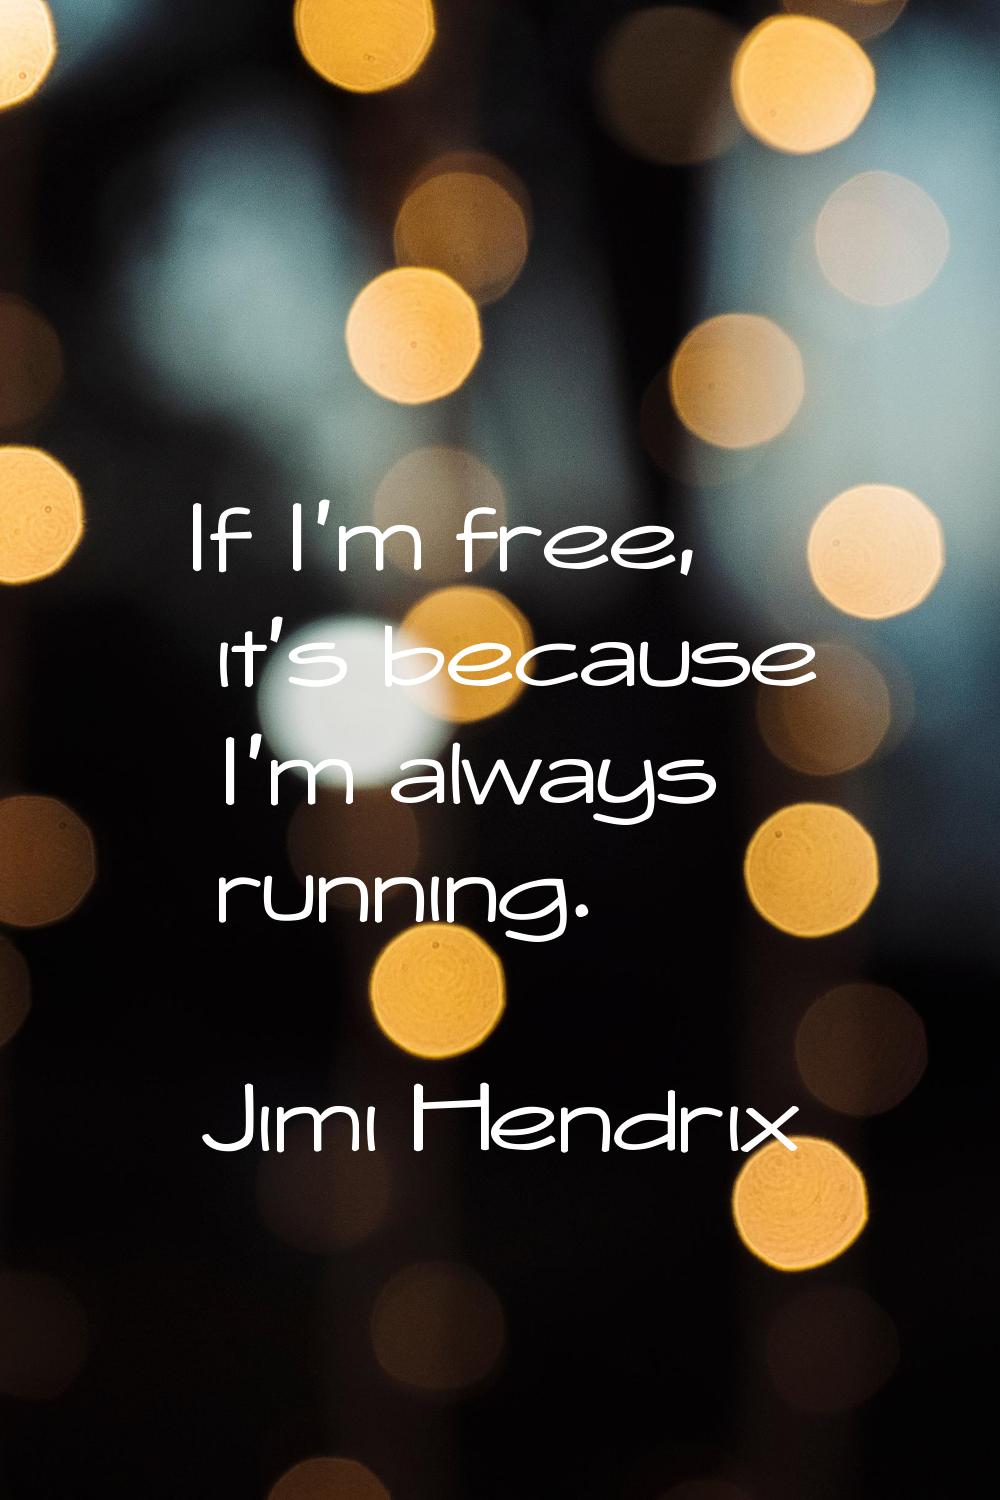 If I'm free, it's because I'm always running.